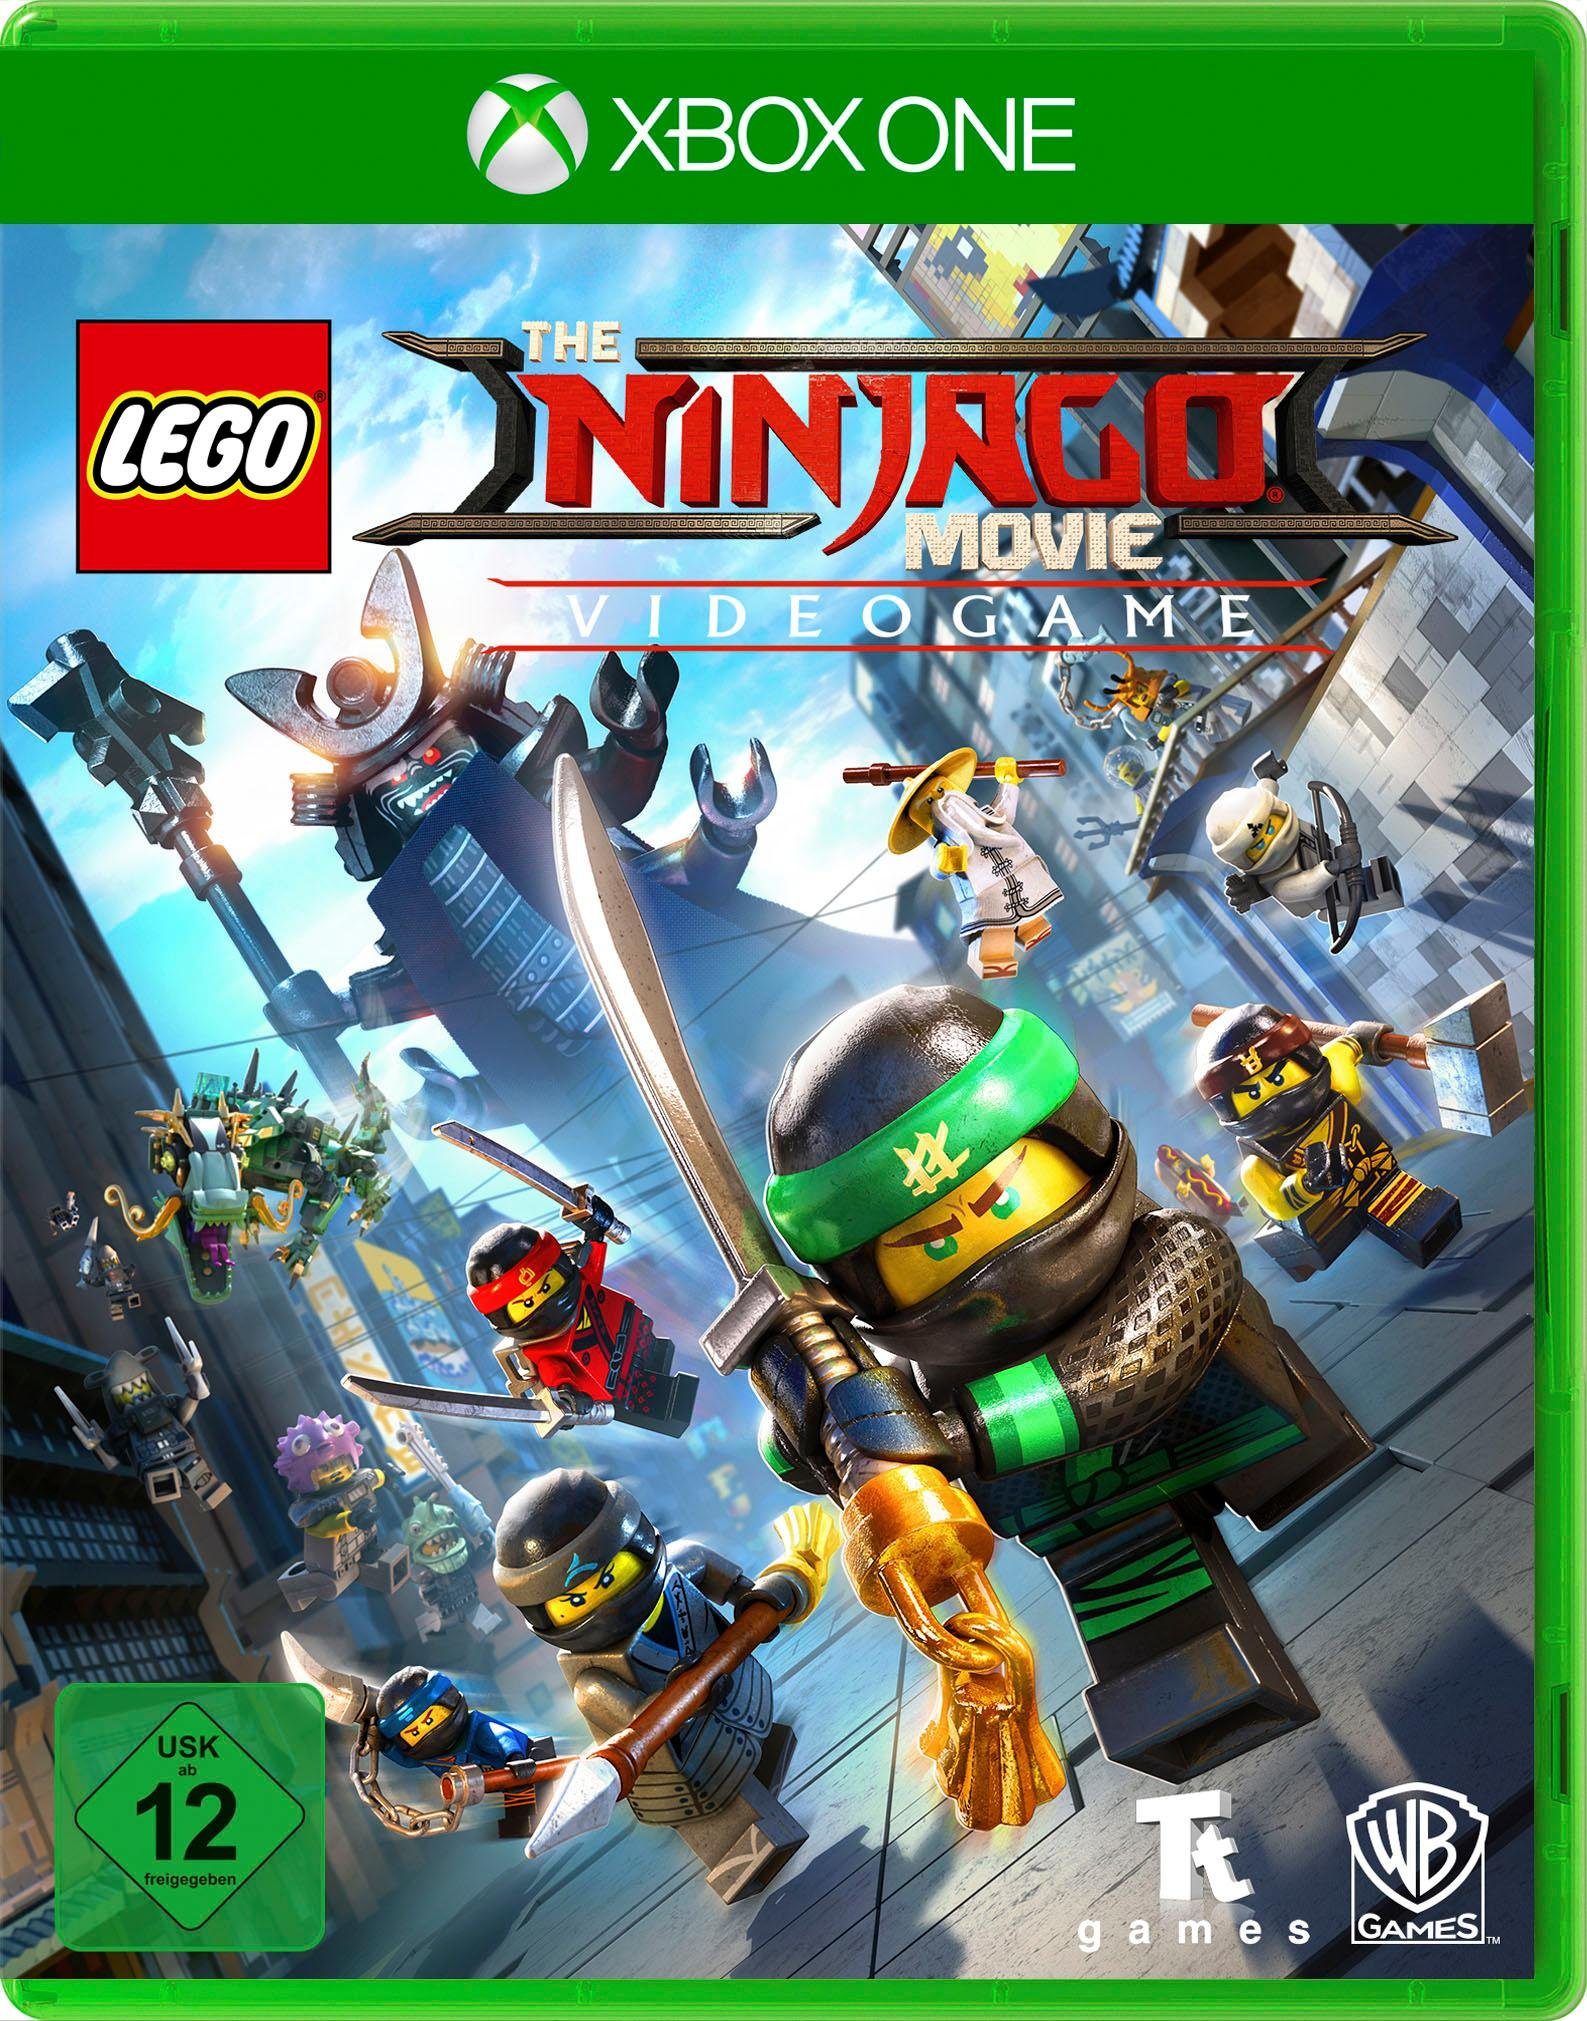 One, The Lego Pyramide Movie Xbox Videogame Software Ninjago